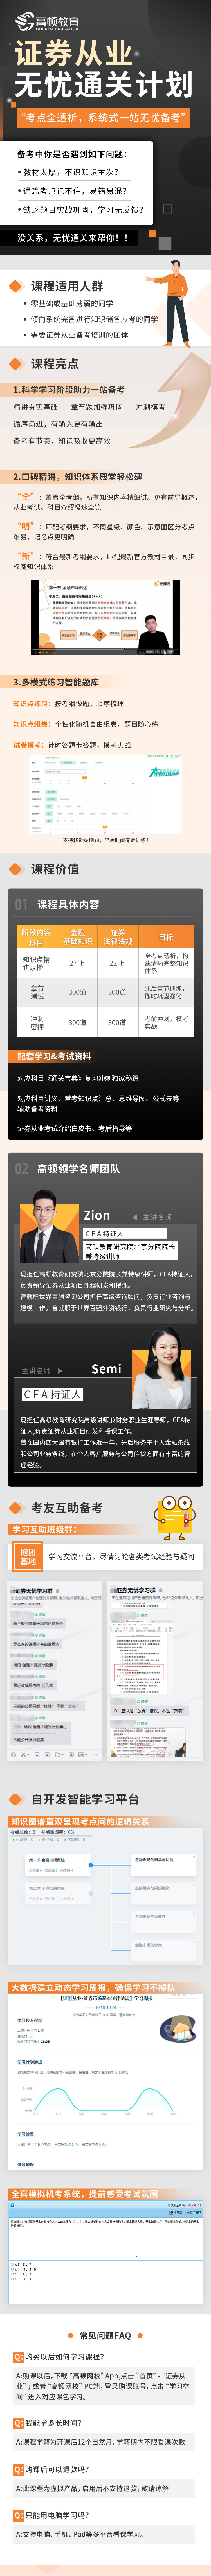 https://simg01.gaodunwangxiao.com/uploadfiles/product-center/202305/17/d55f0_20230517164550.jpg